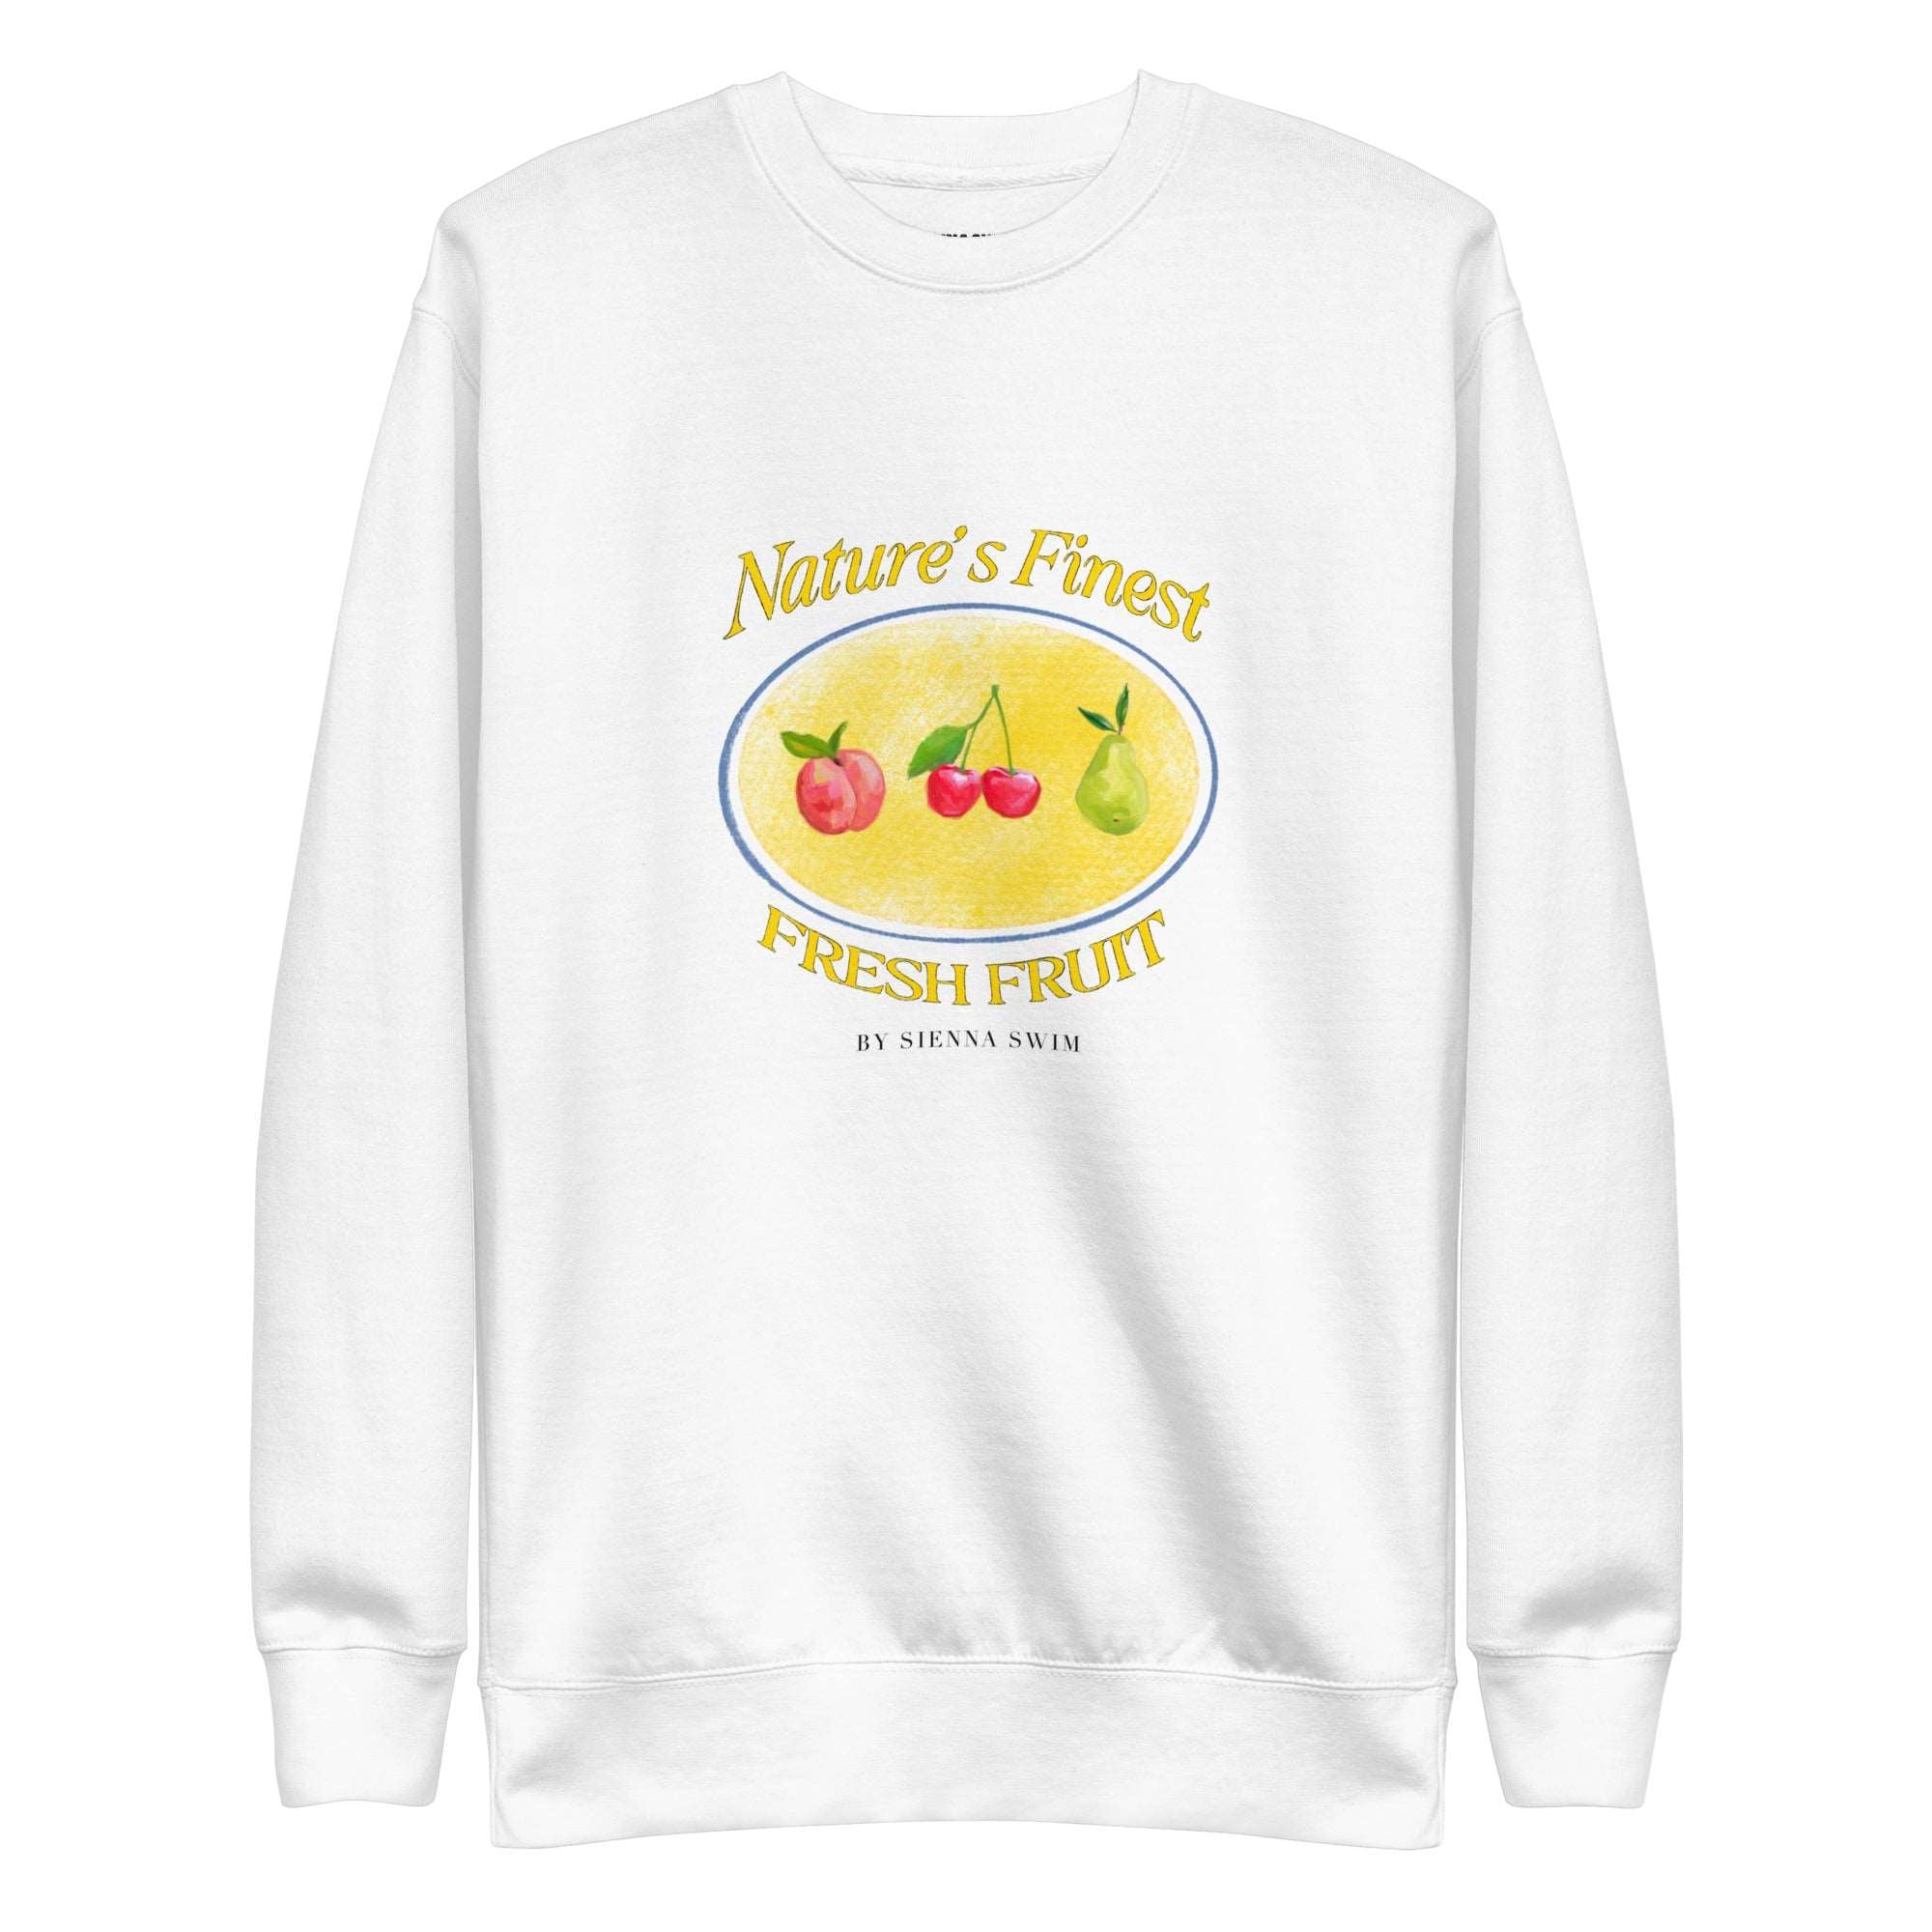 Outerwear: "Fresh Fruit" oversized sweatshirt